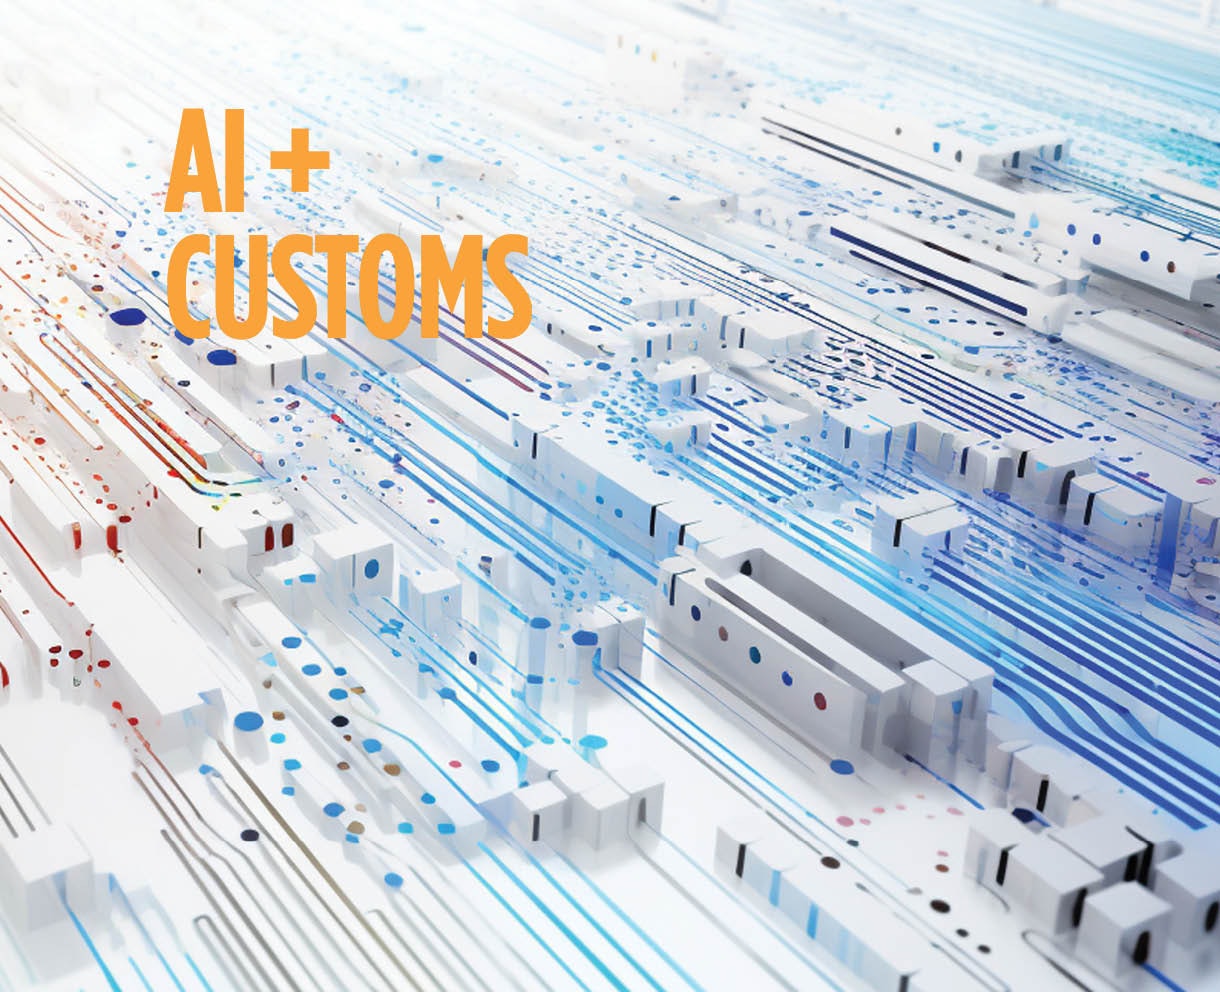 AI + Customs to Accelerate Secure Trade